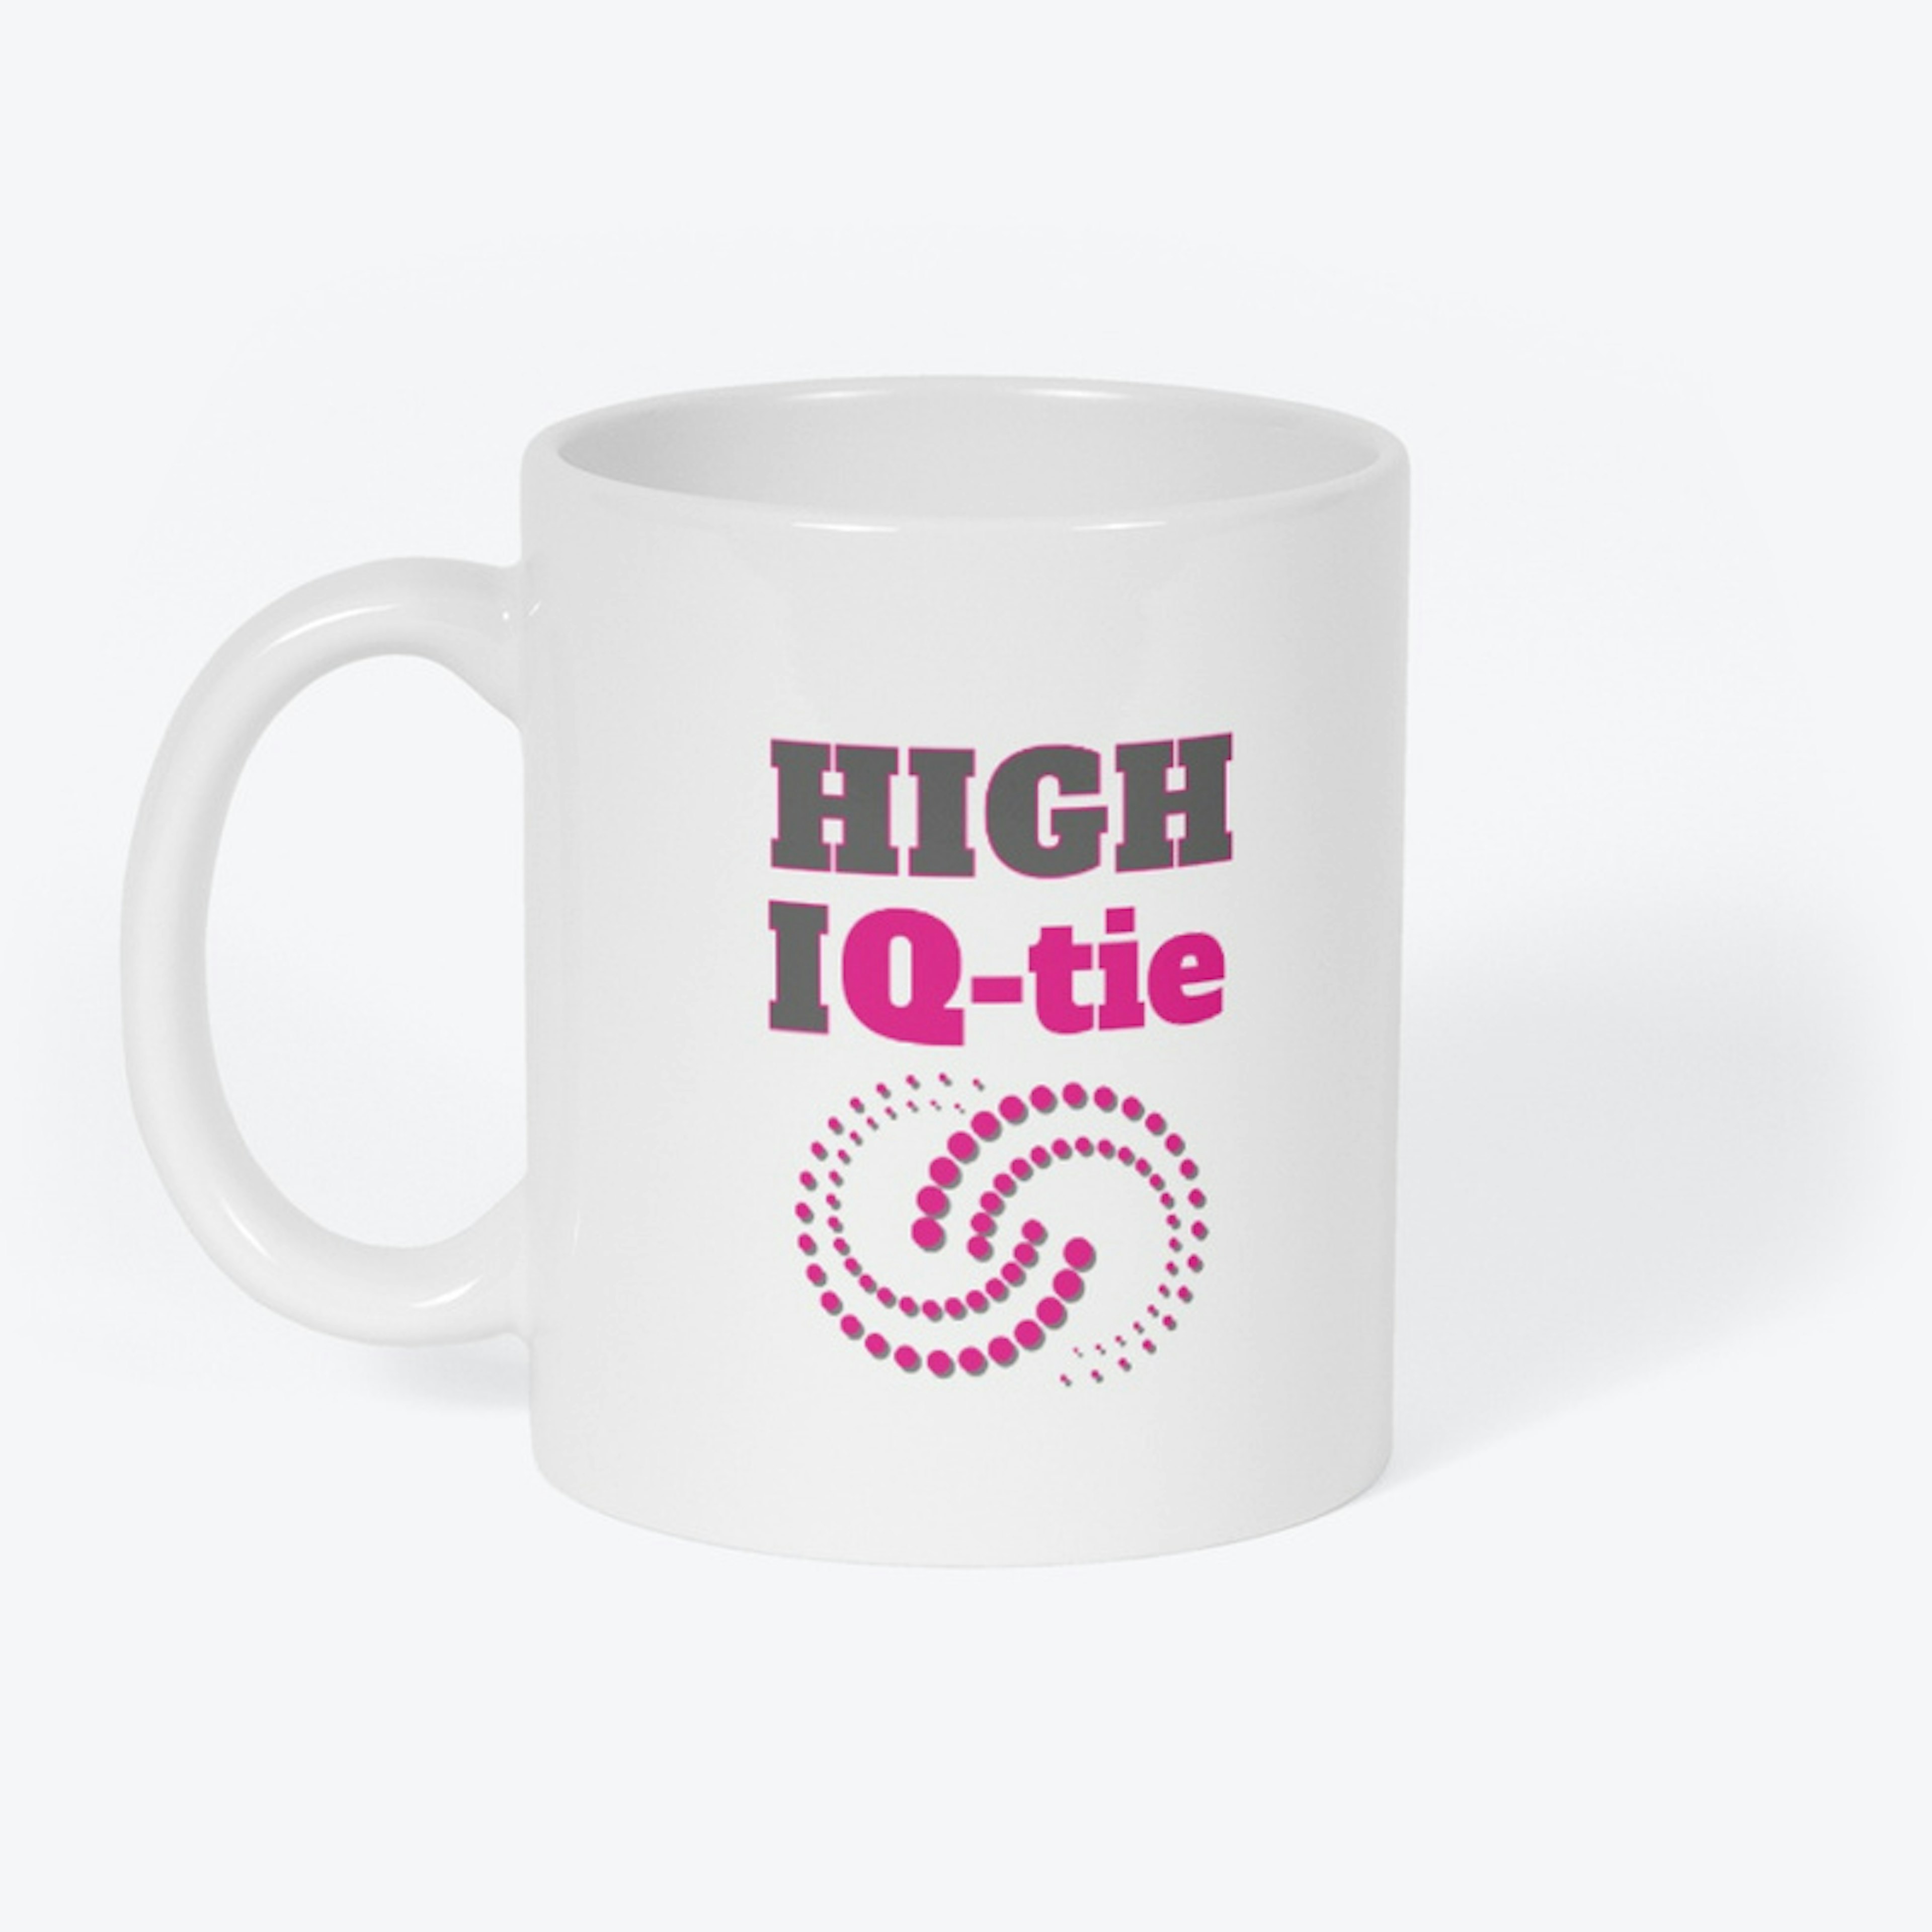 High IQ-tie